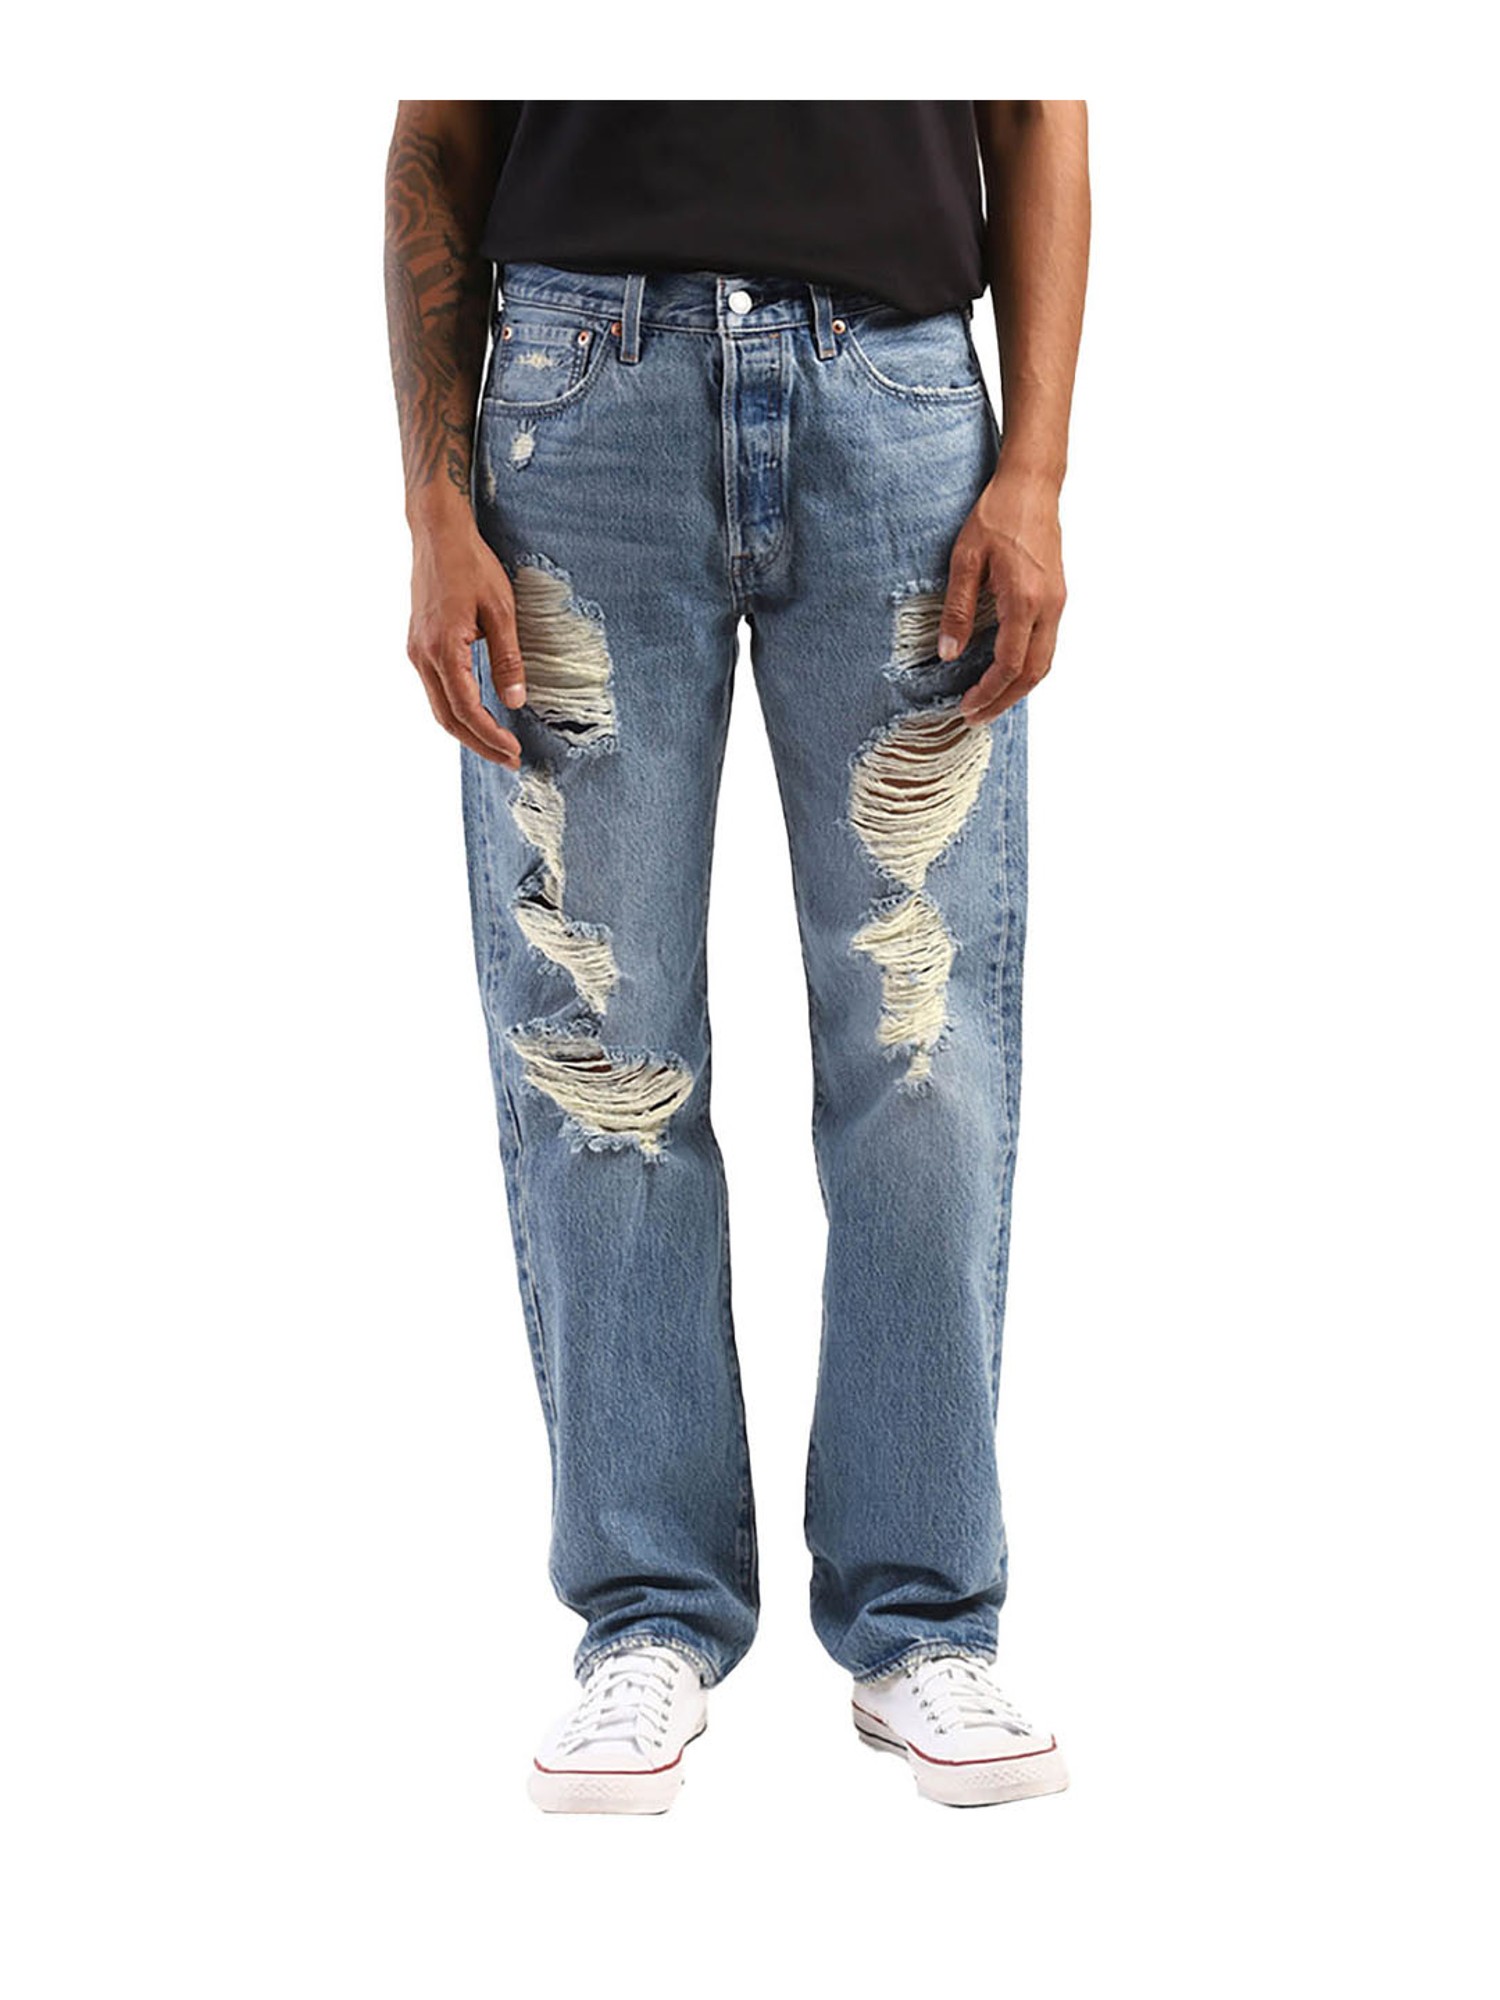 Buy Levi's Indigo Distressed Jeans for Men Online @ Tata CLiQ